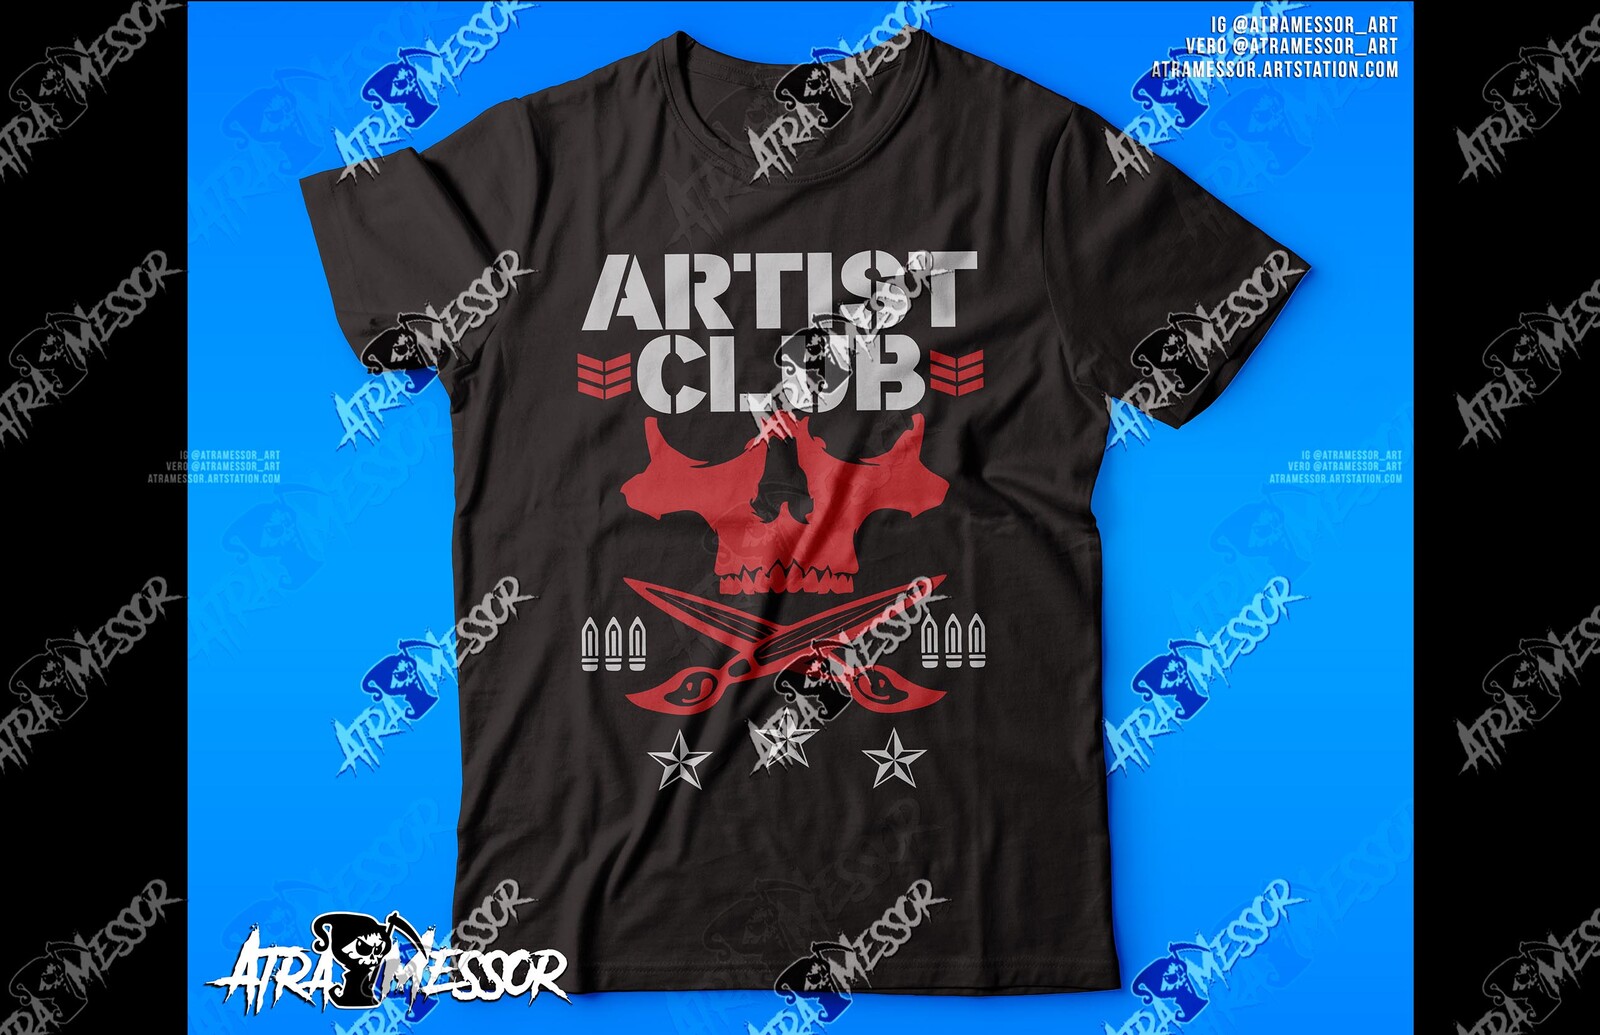 Artist Club "Original"